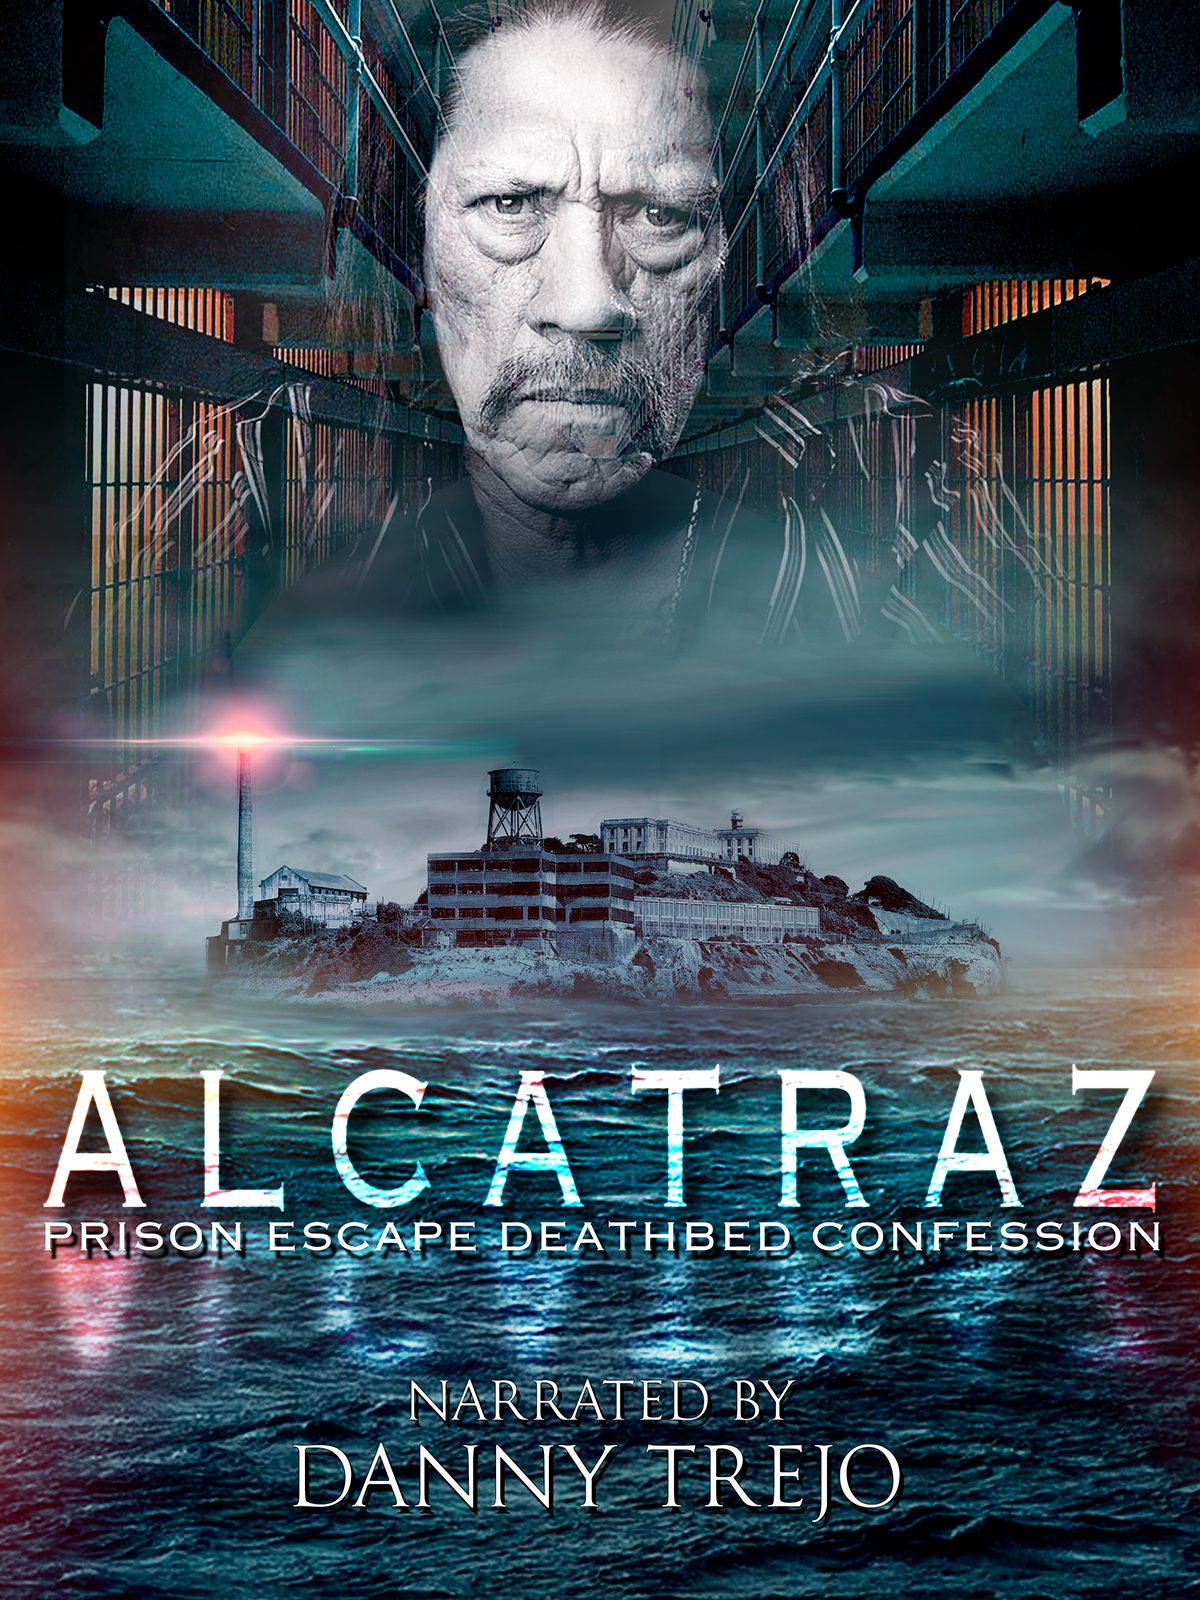 Keyart for the movie Alcatraz Prison Escape: Deathbed Confession